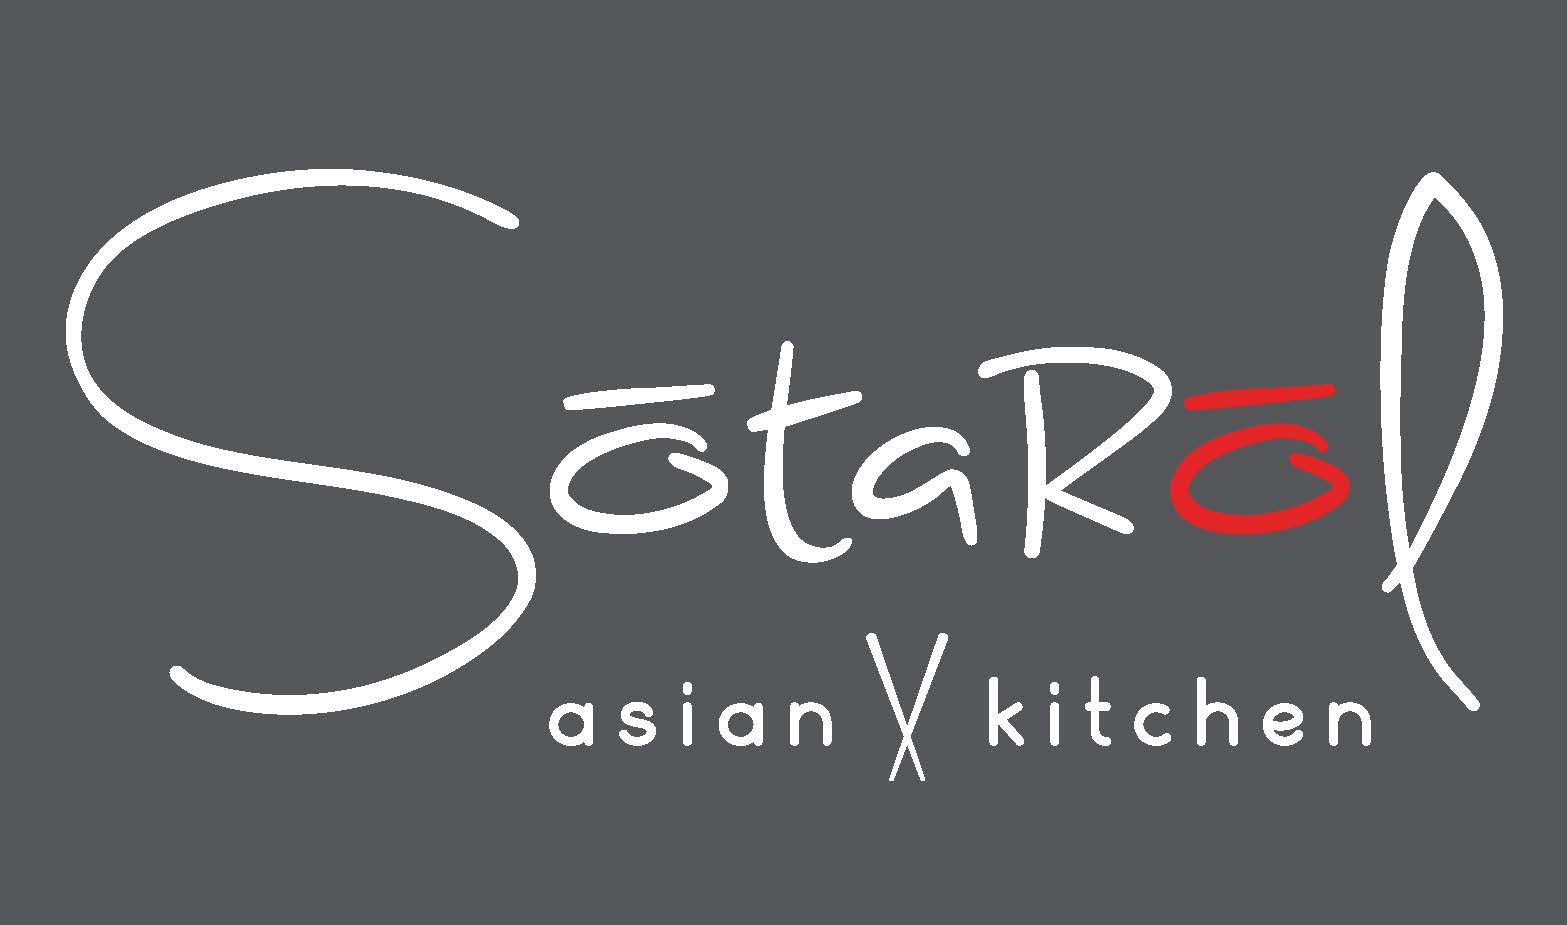 SotaRol Asian Kitchen Logo - Grey Backgroud.jpg